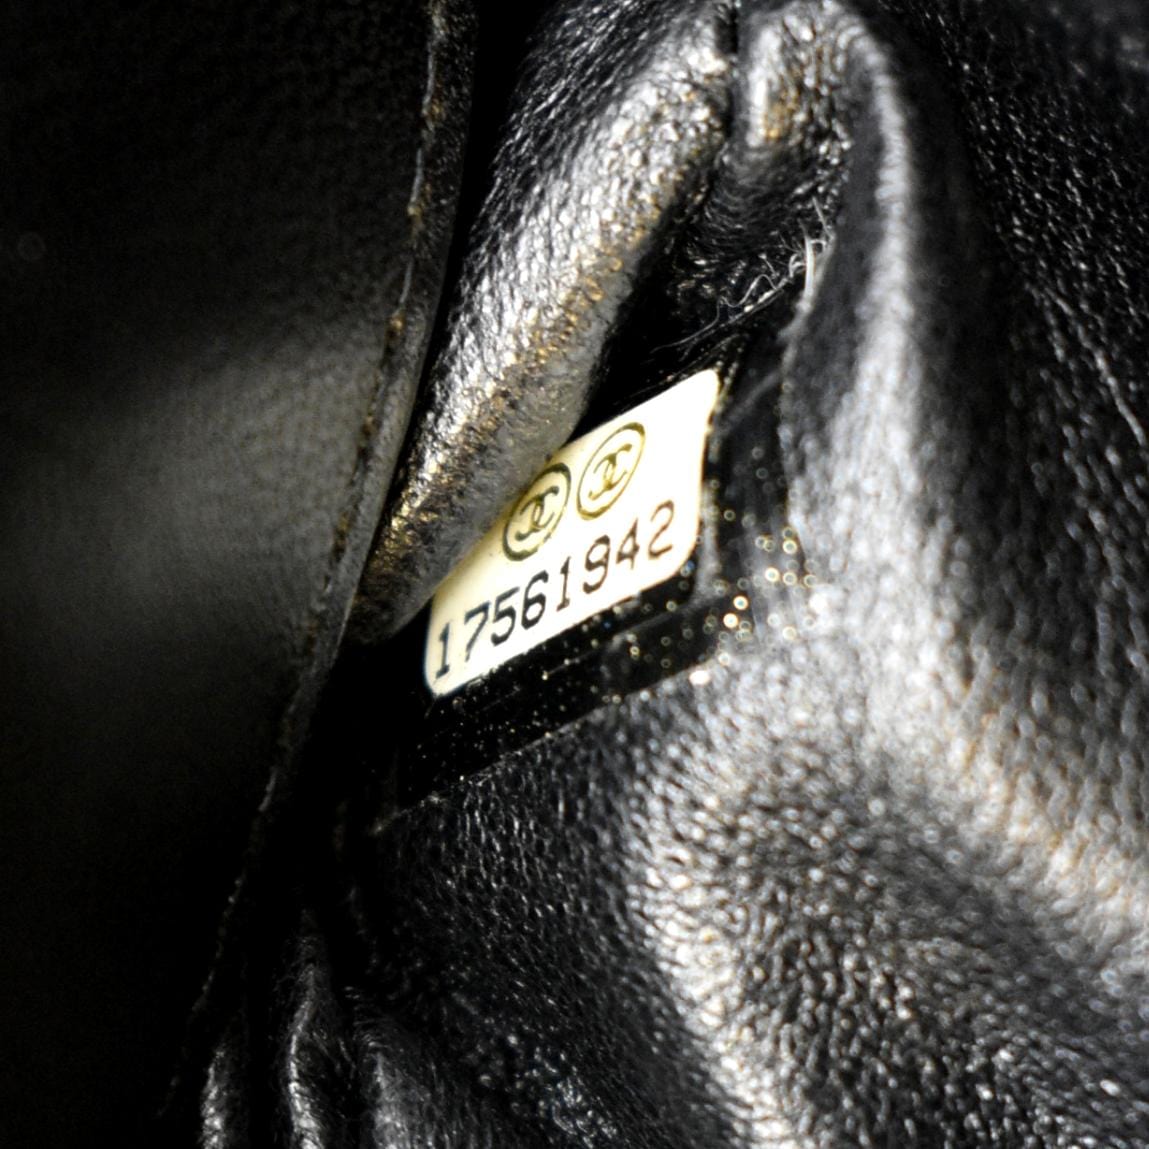 Pre-owned Chanel 2012/2013 Medium Boy Shoulder Bag In 中性色